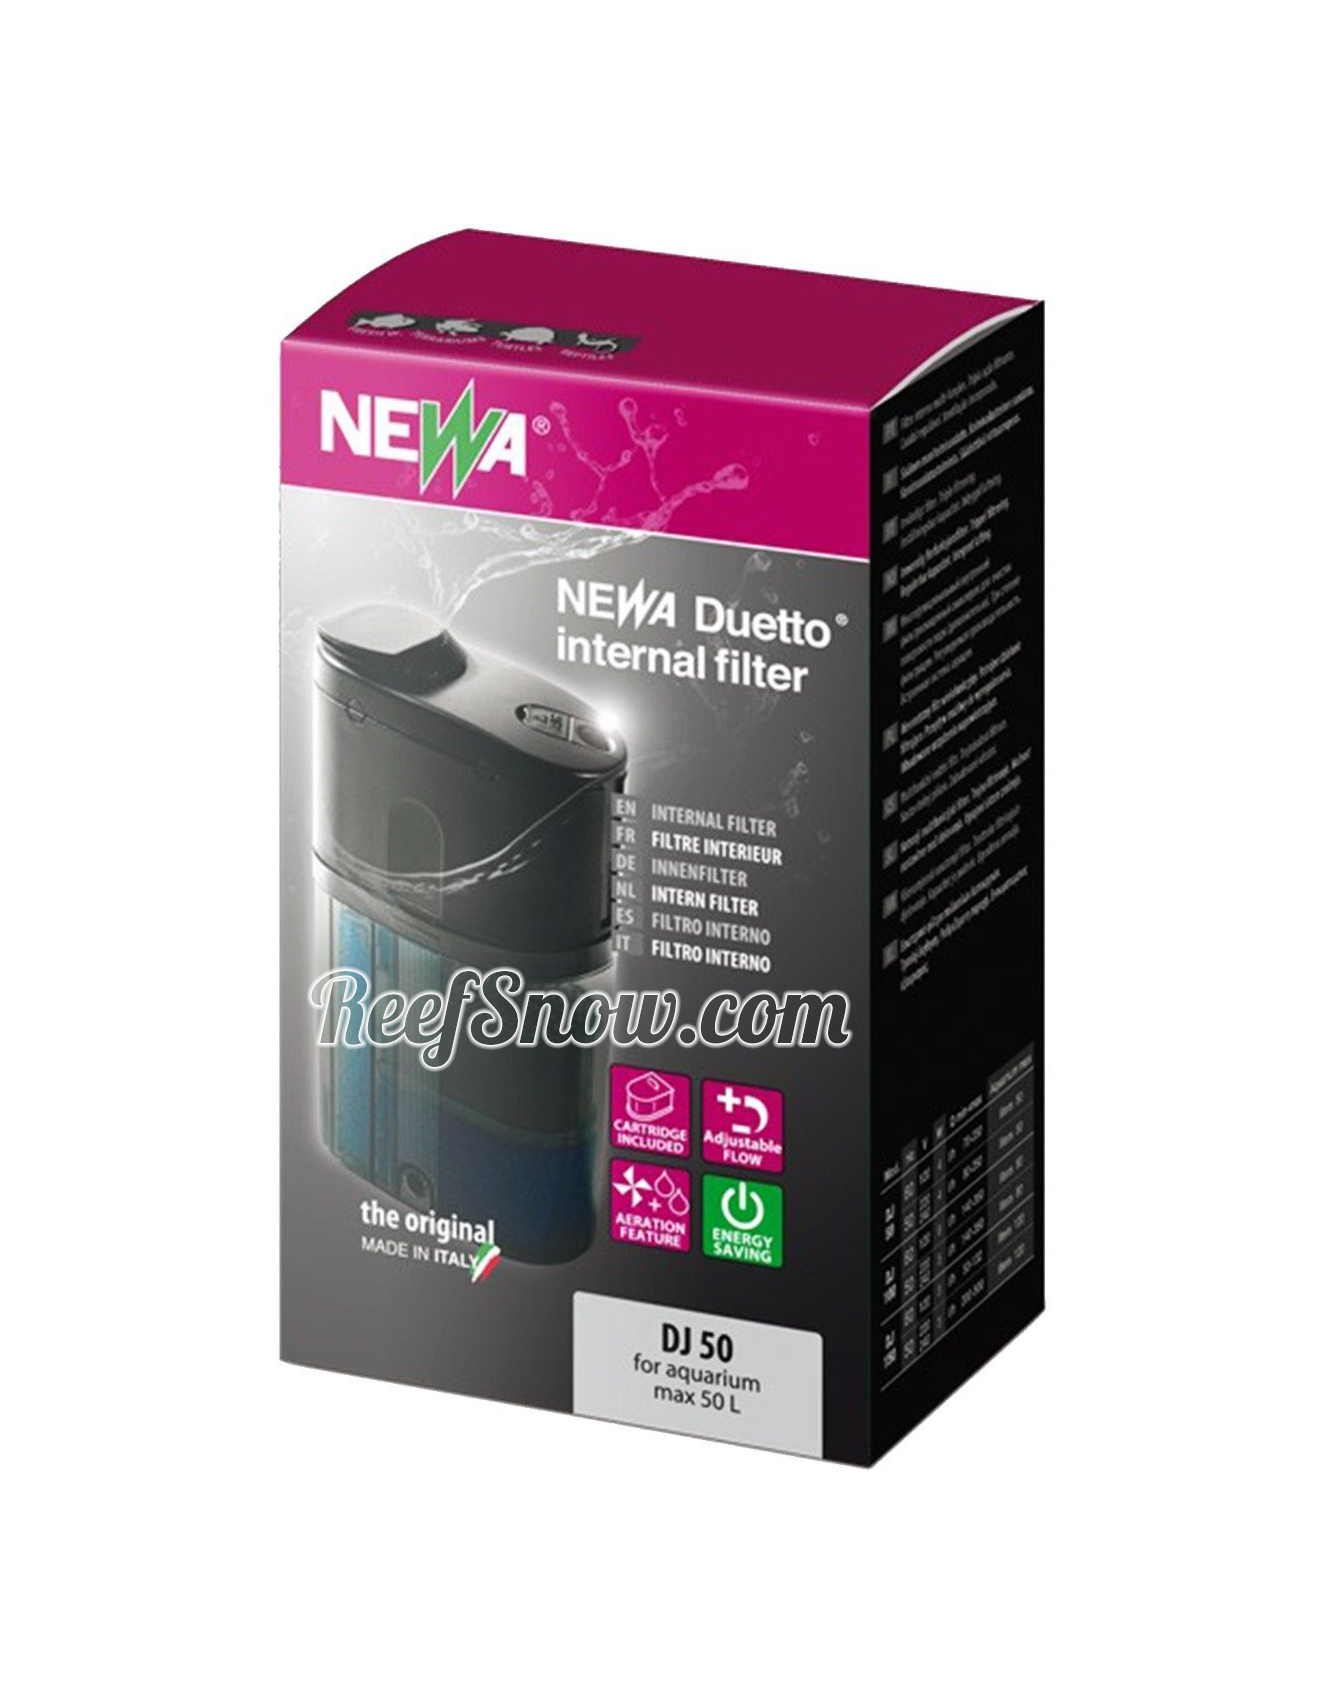 NEWA Duetto internal filter - DJ50